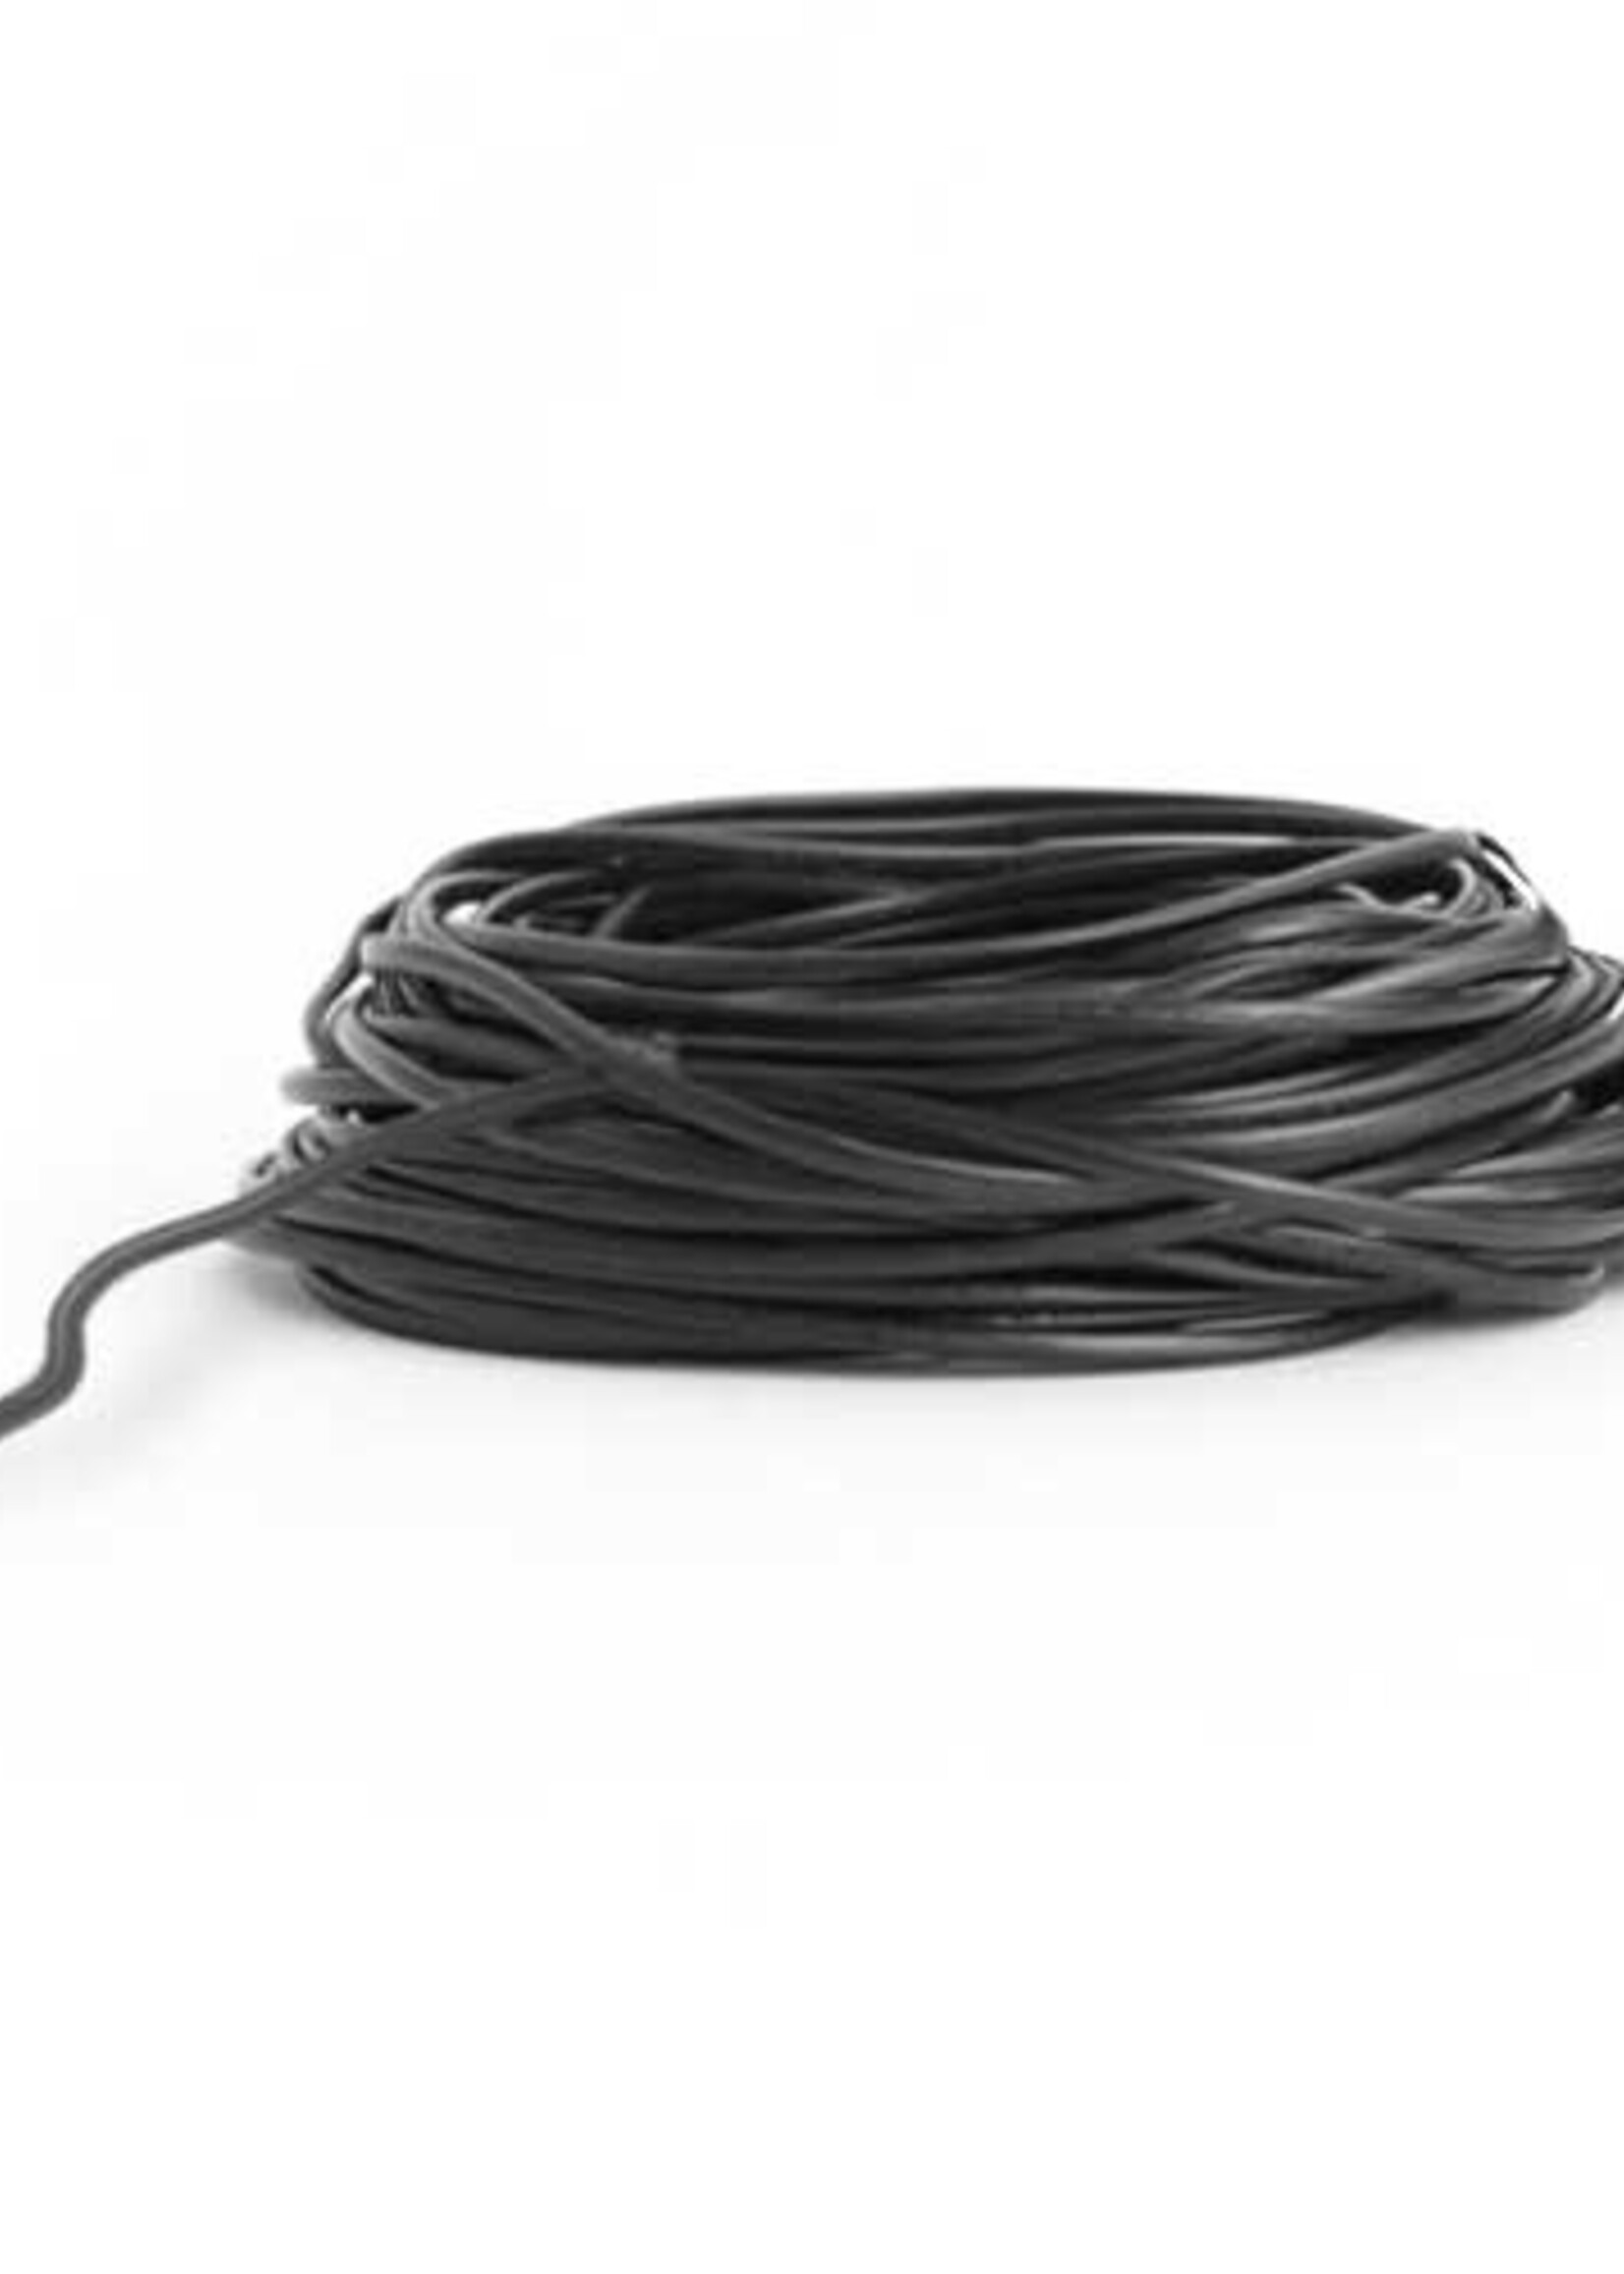 LEDWINKEL-Online Extension power cord 0,75mm² 2-wire 50 meter